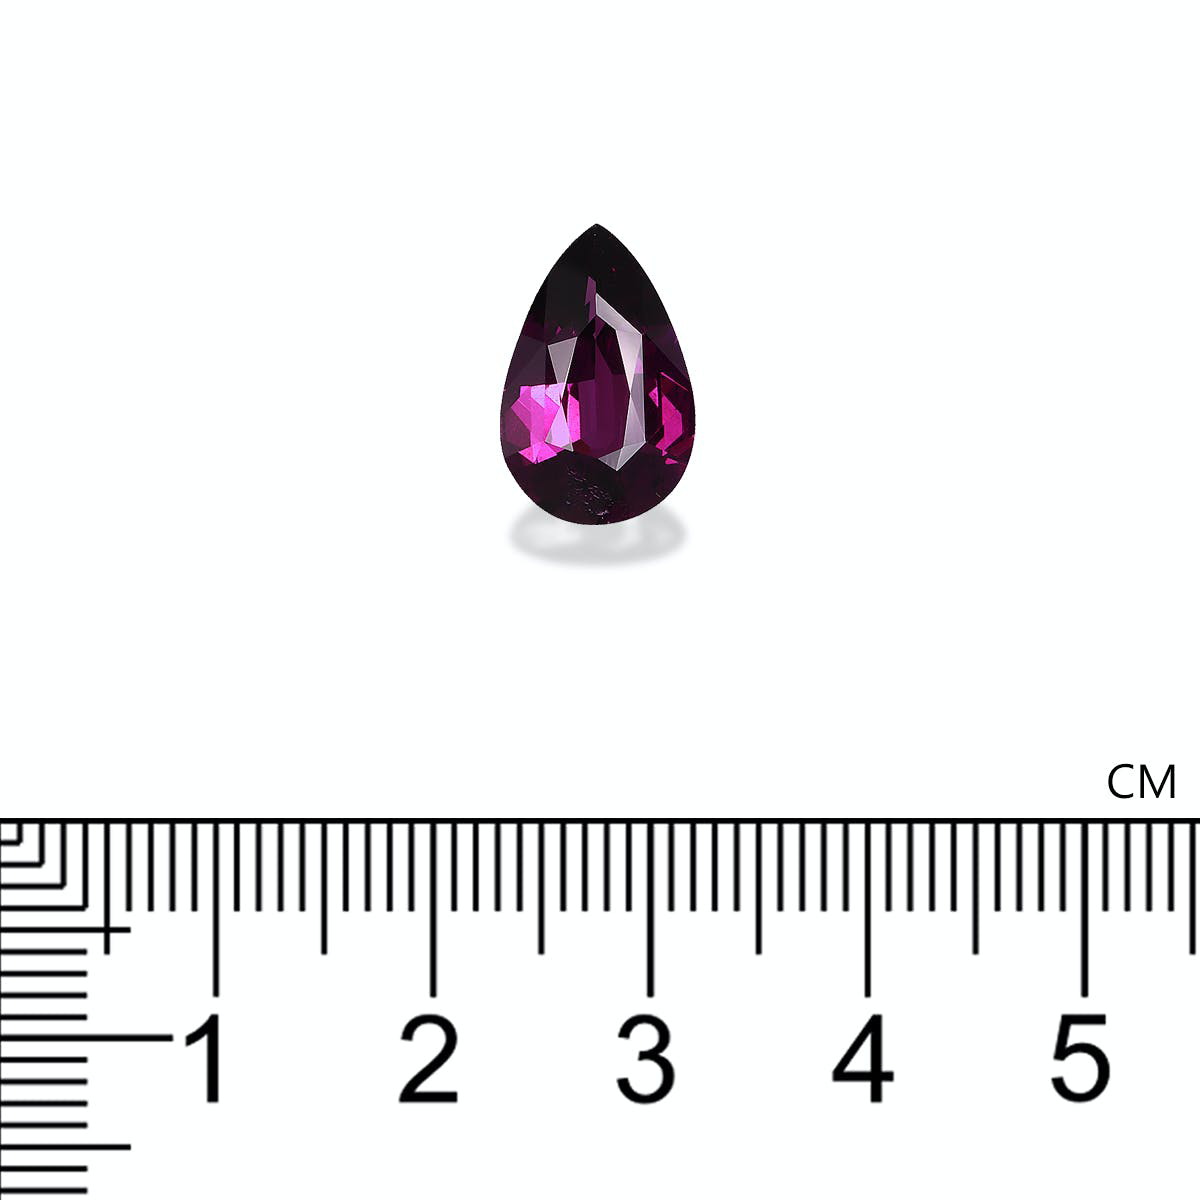 Picture of Purple Umbalite Garnet 4.00ct (RD0236)